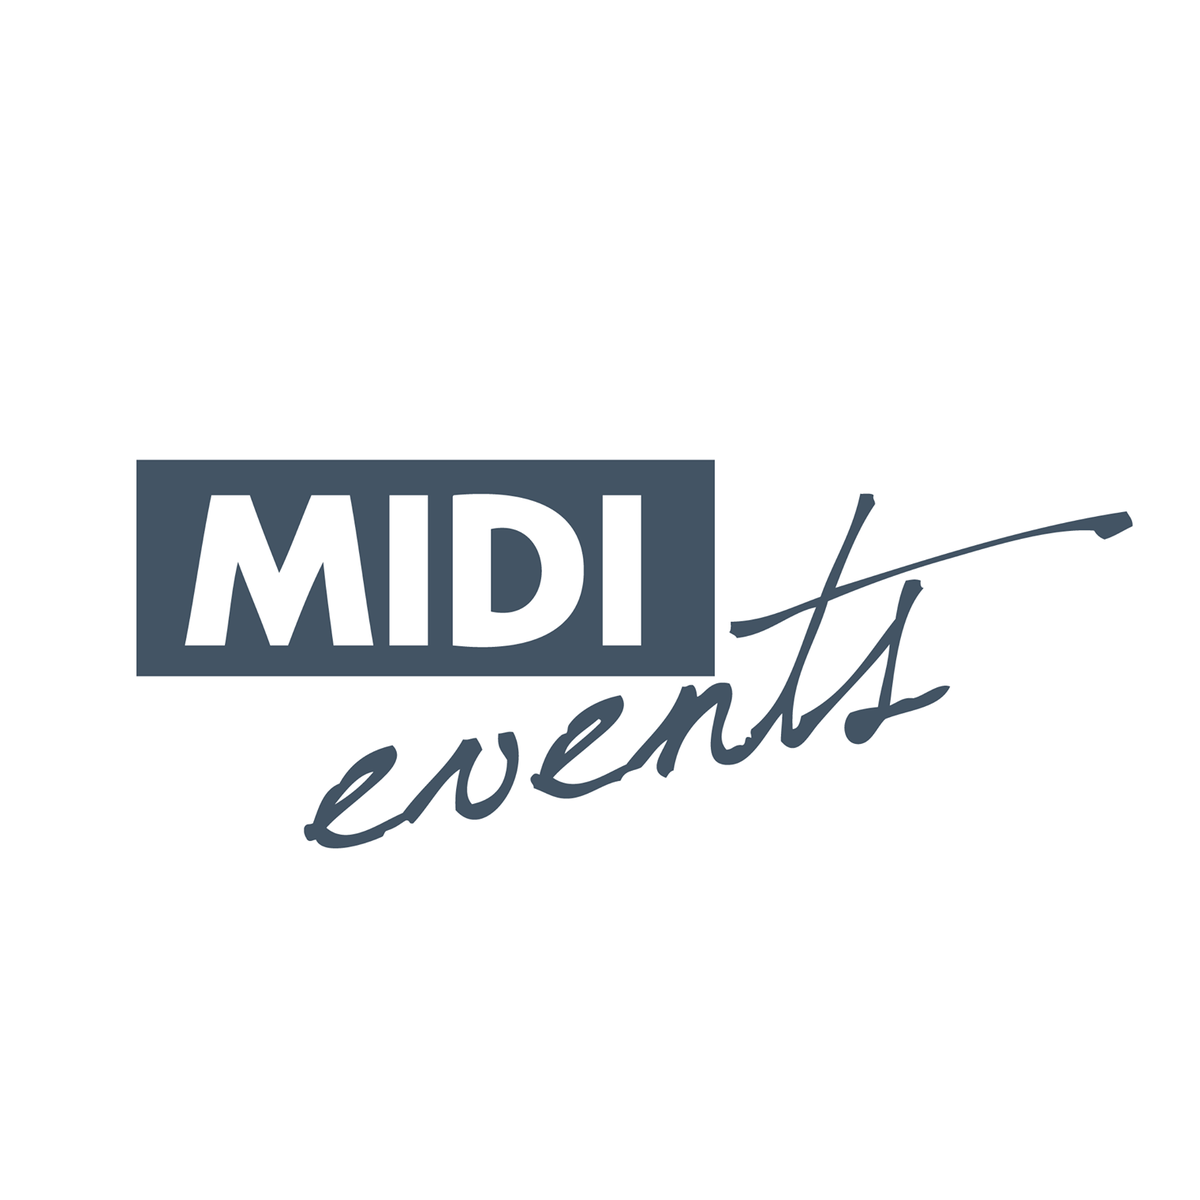 MIDI Events